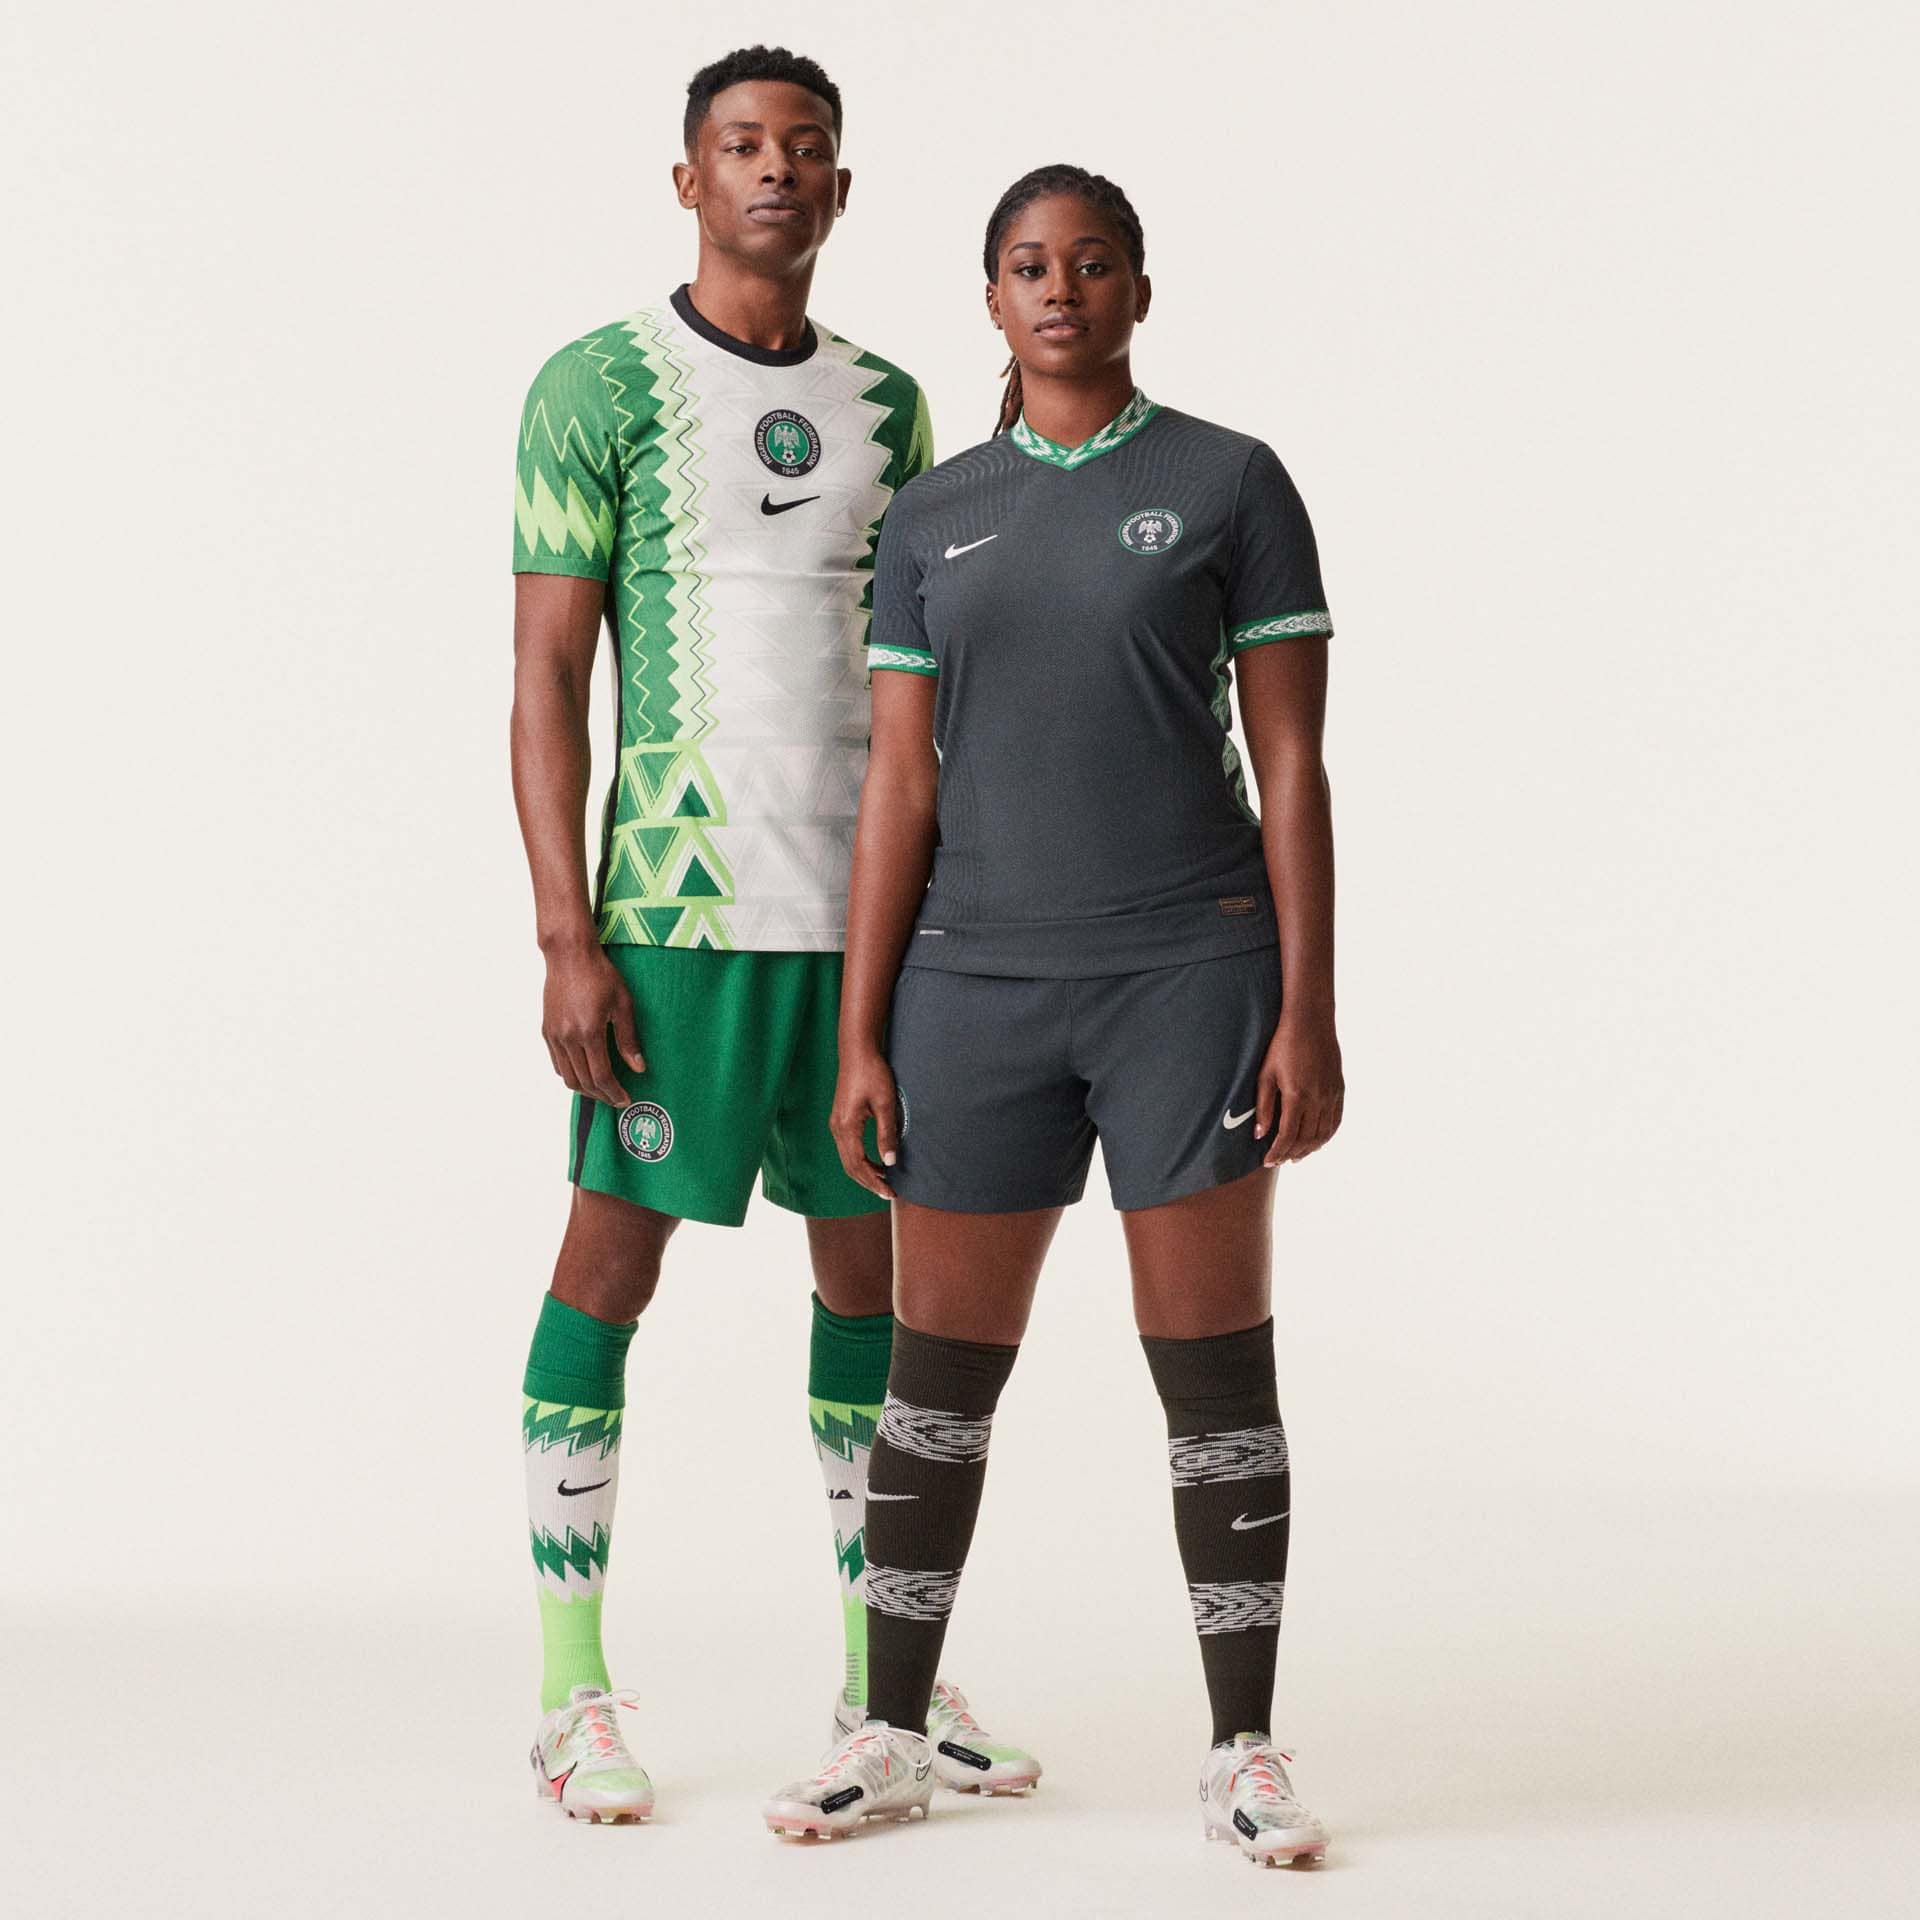 Experto desagradable Ingenieros Todo Sobre Camisetas on Twitter: "🇳🇬 @nikefootball ha presentado las  nuevas camisetas de Nigeria 2020: https://t.co/6nZfDkNUe6  https://t.co/PKh9qyOjKc" / Twitter